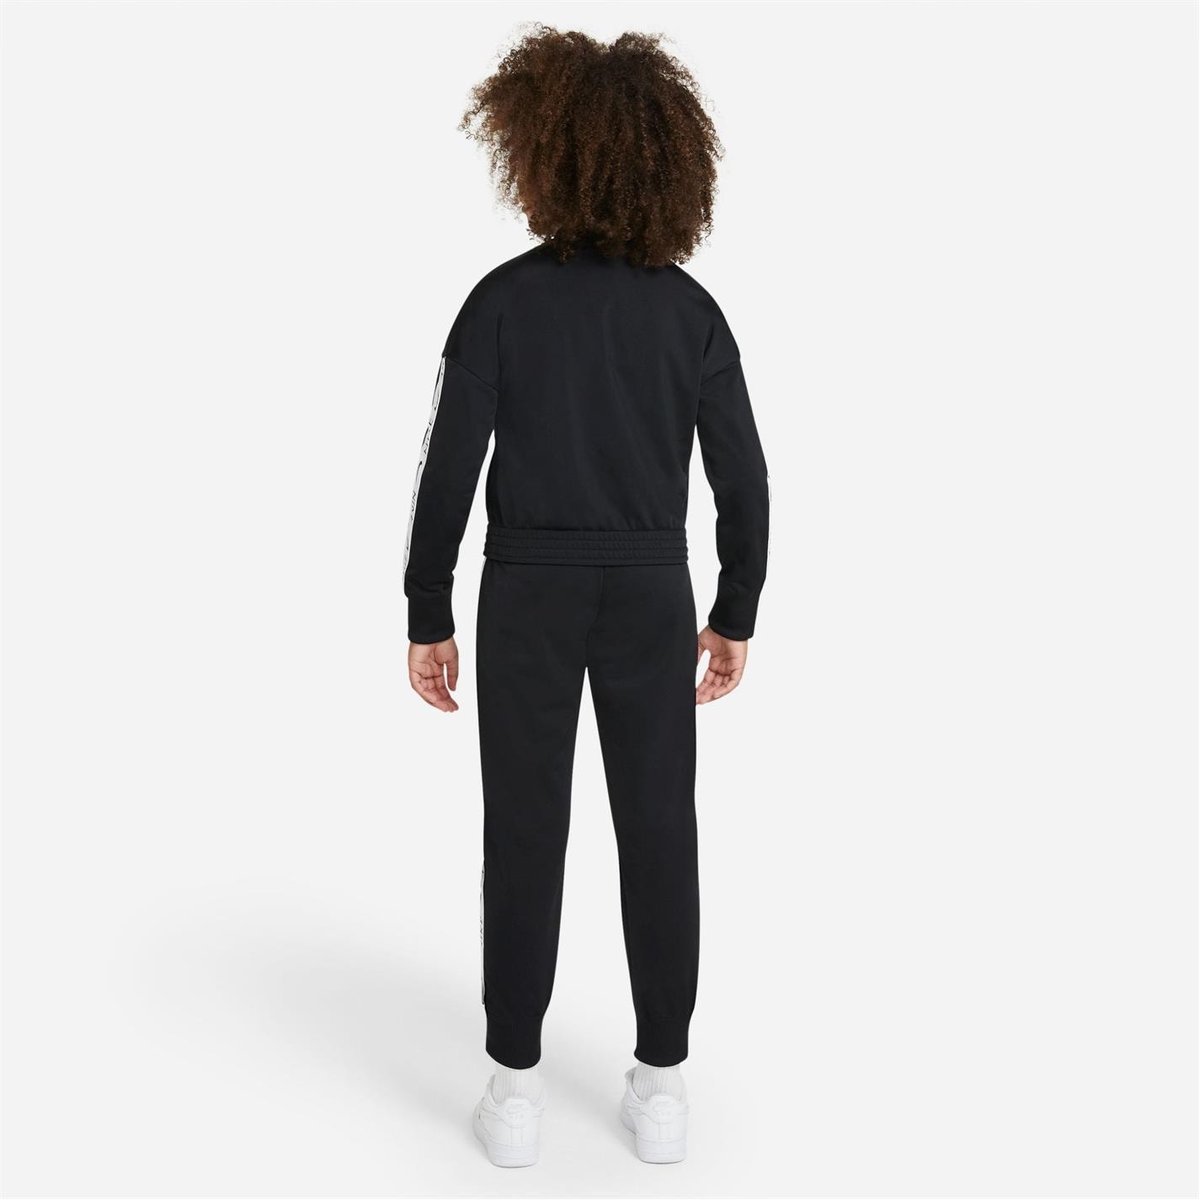 Nike Sportswear Tracksuit Junior Girls Black, £30.00